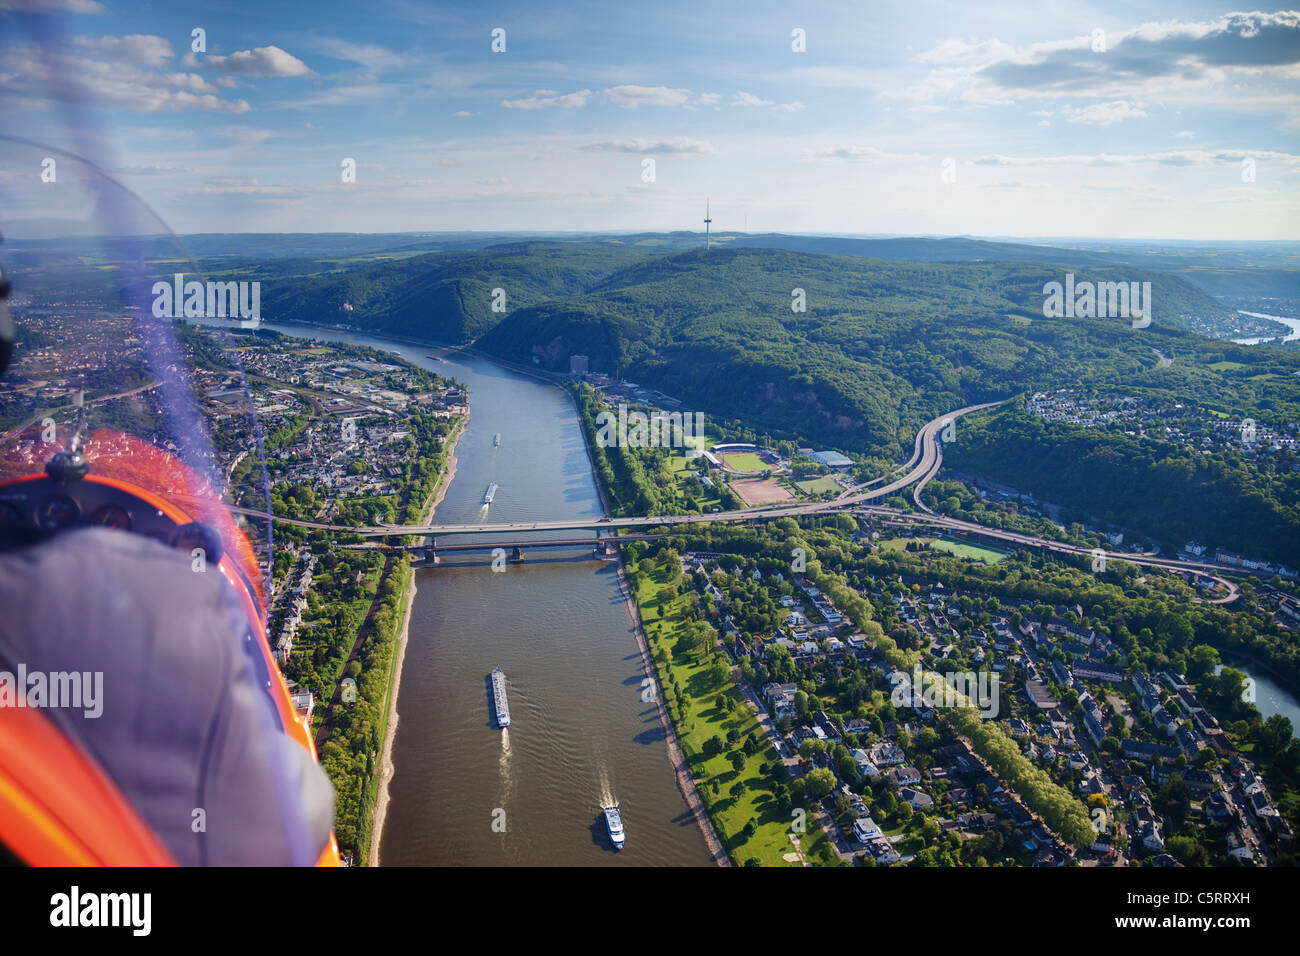 Europe, Germany, Rhineland-Palatinate, Koblenz, View of Pfaffendorfer Bridge over rhine Stock Photo